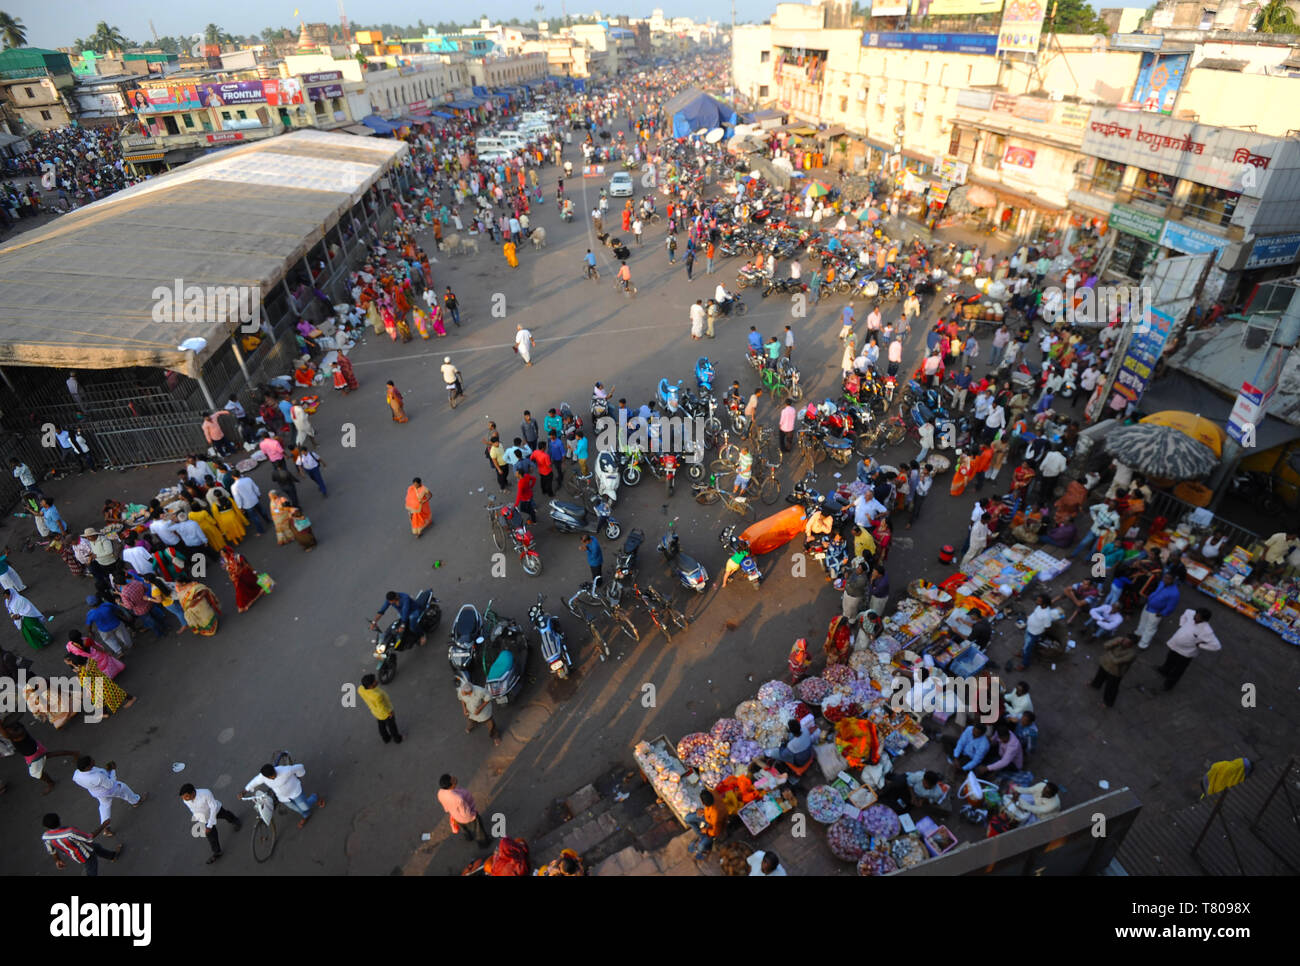 Puri town centre showing main street and market near the Jagannath Temple to Lord Vishnu, Puri, Odisha, India, Asia Stock Photo